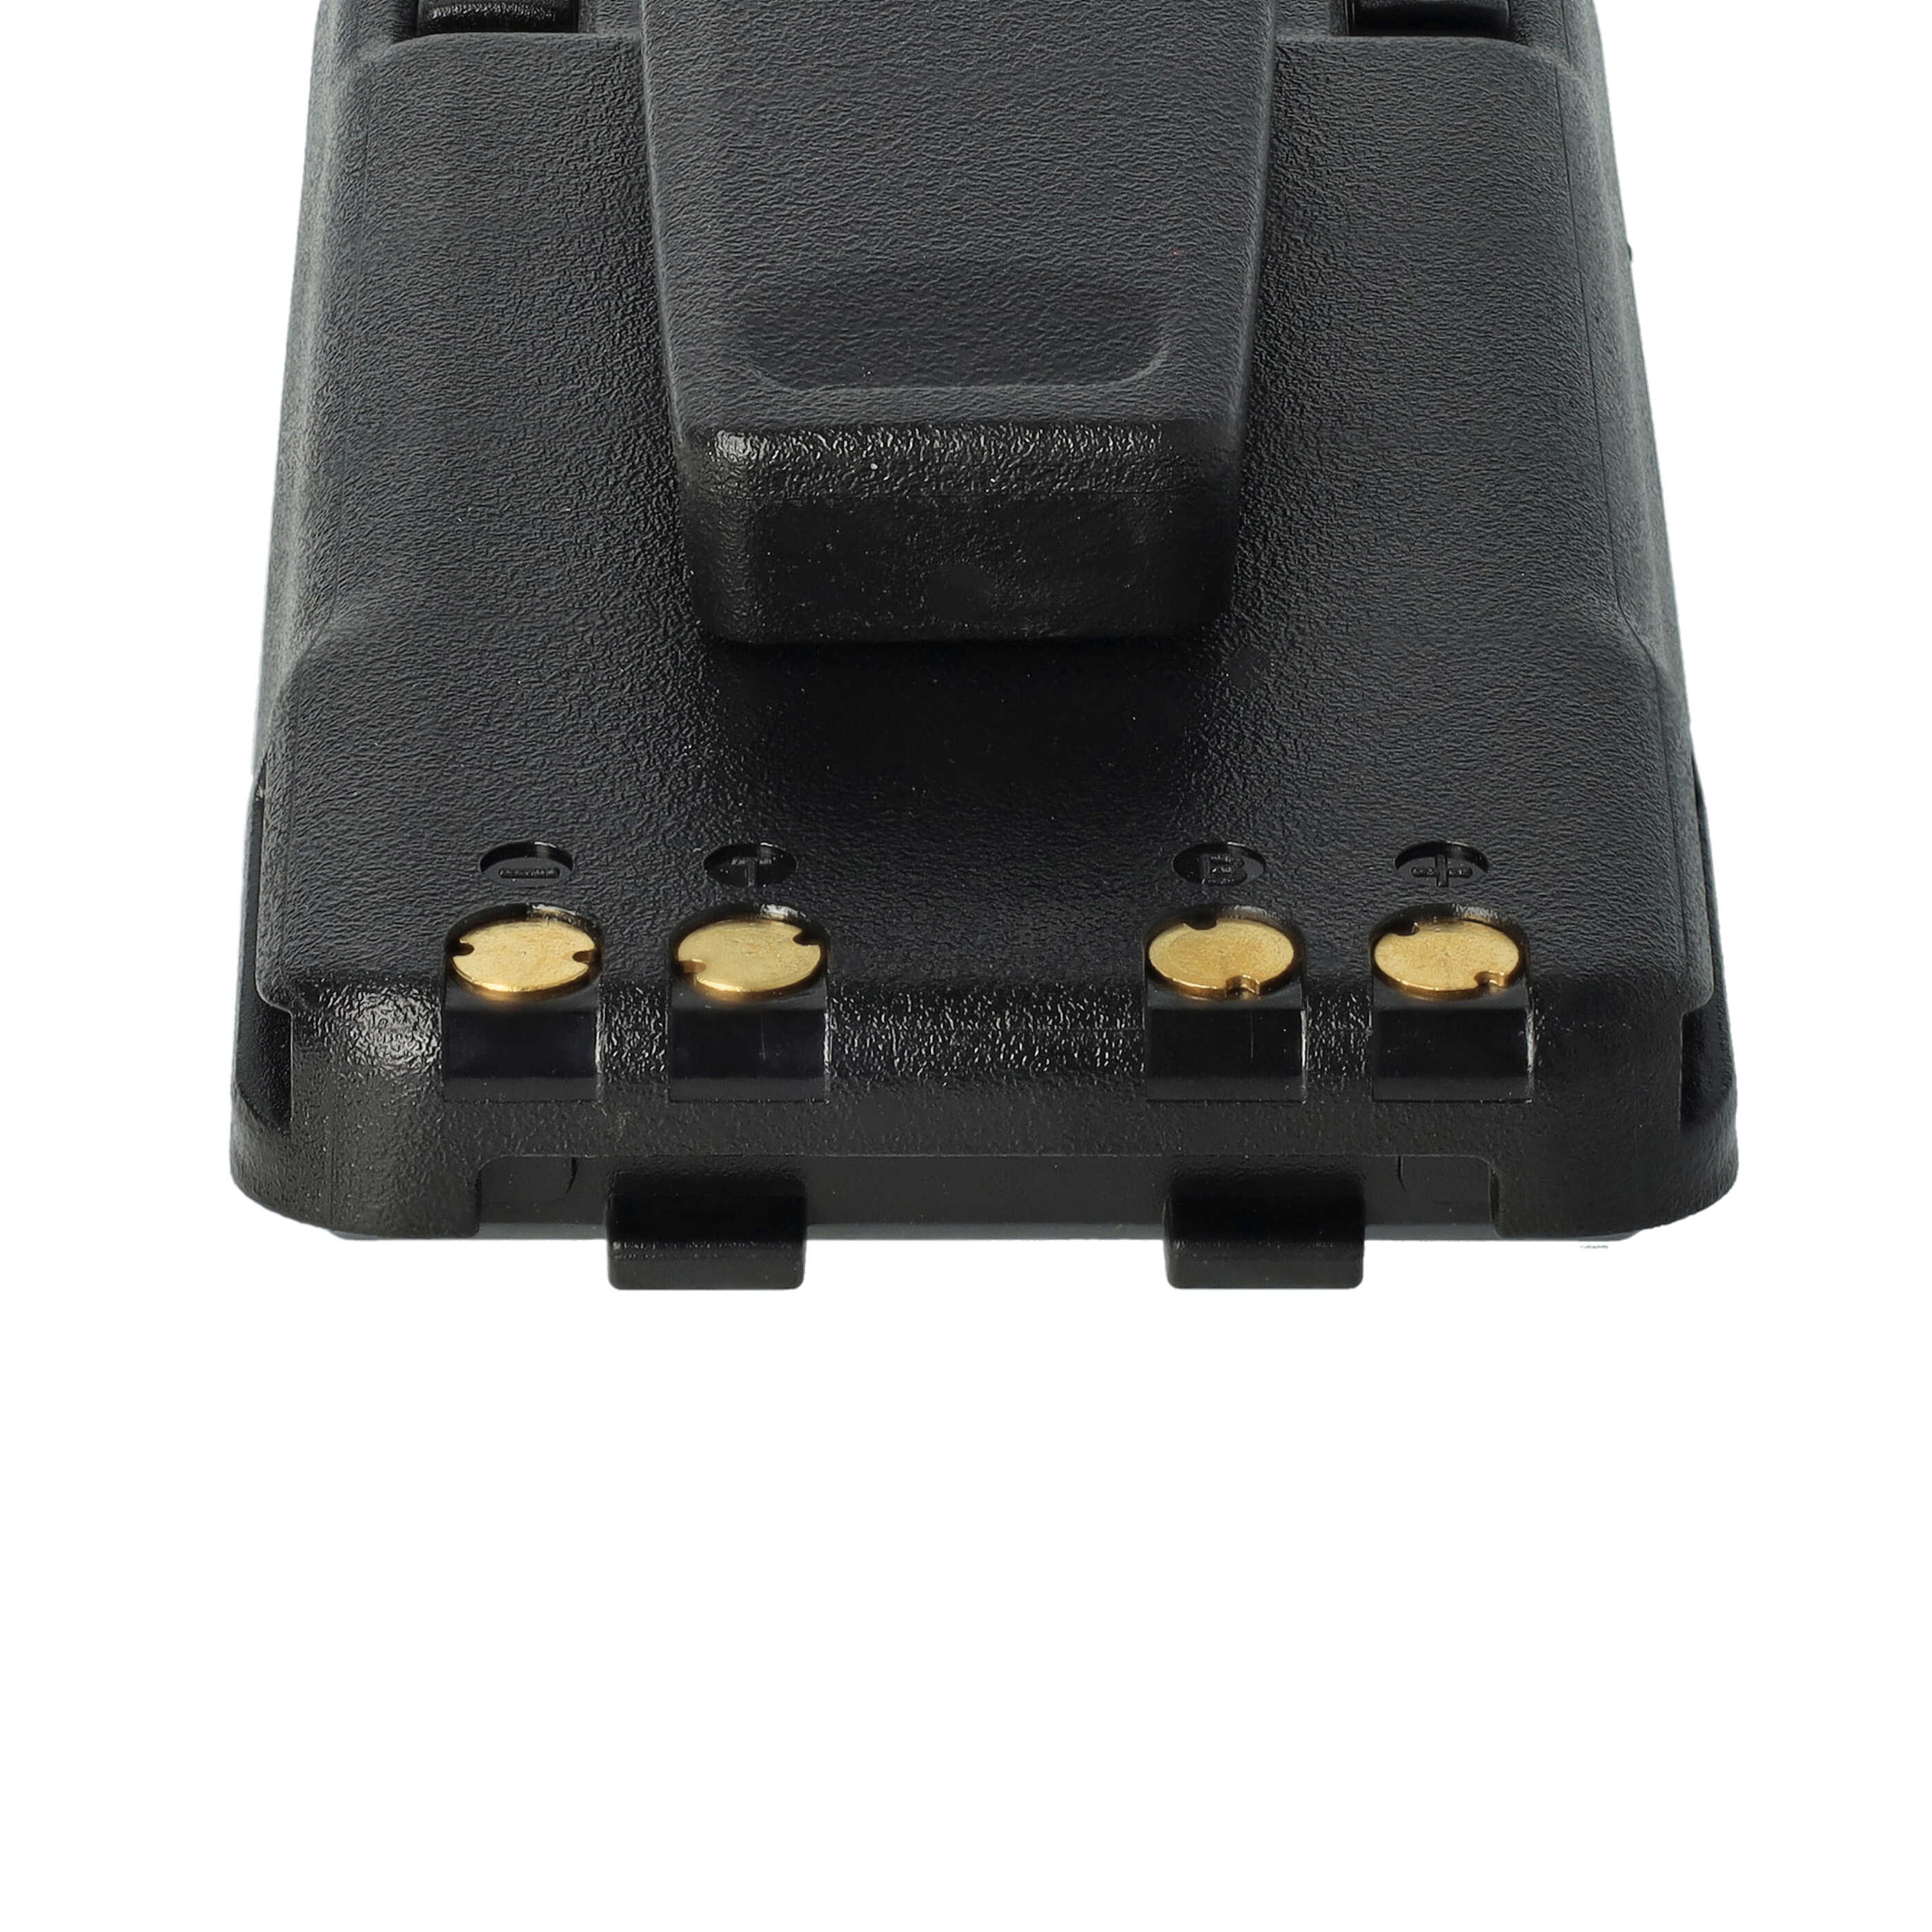 Batterie remplace Icom BP-279, BP-280, BP-280LI pour radio talkie-walkie - 1500mAh 7,4V Li-ion